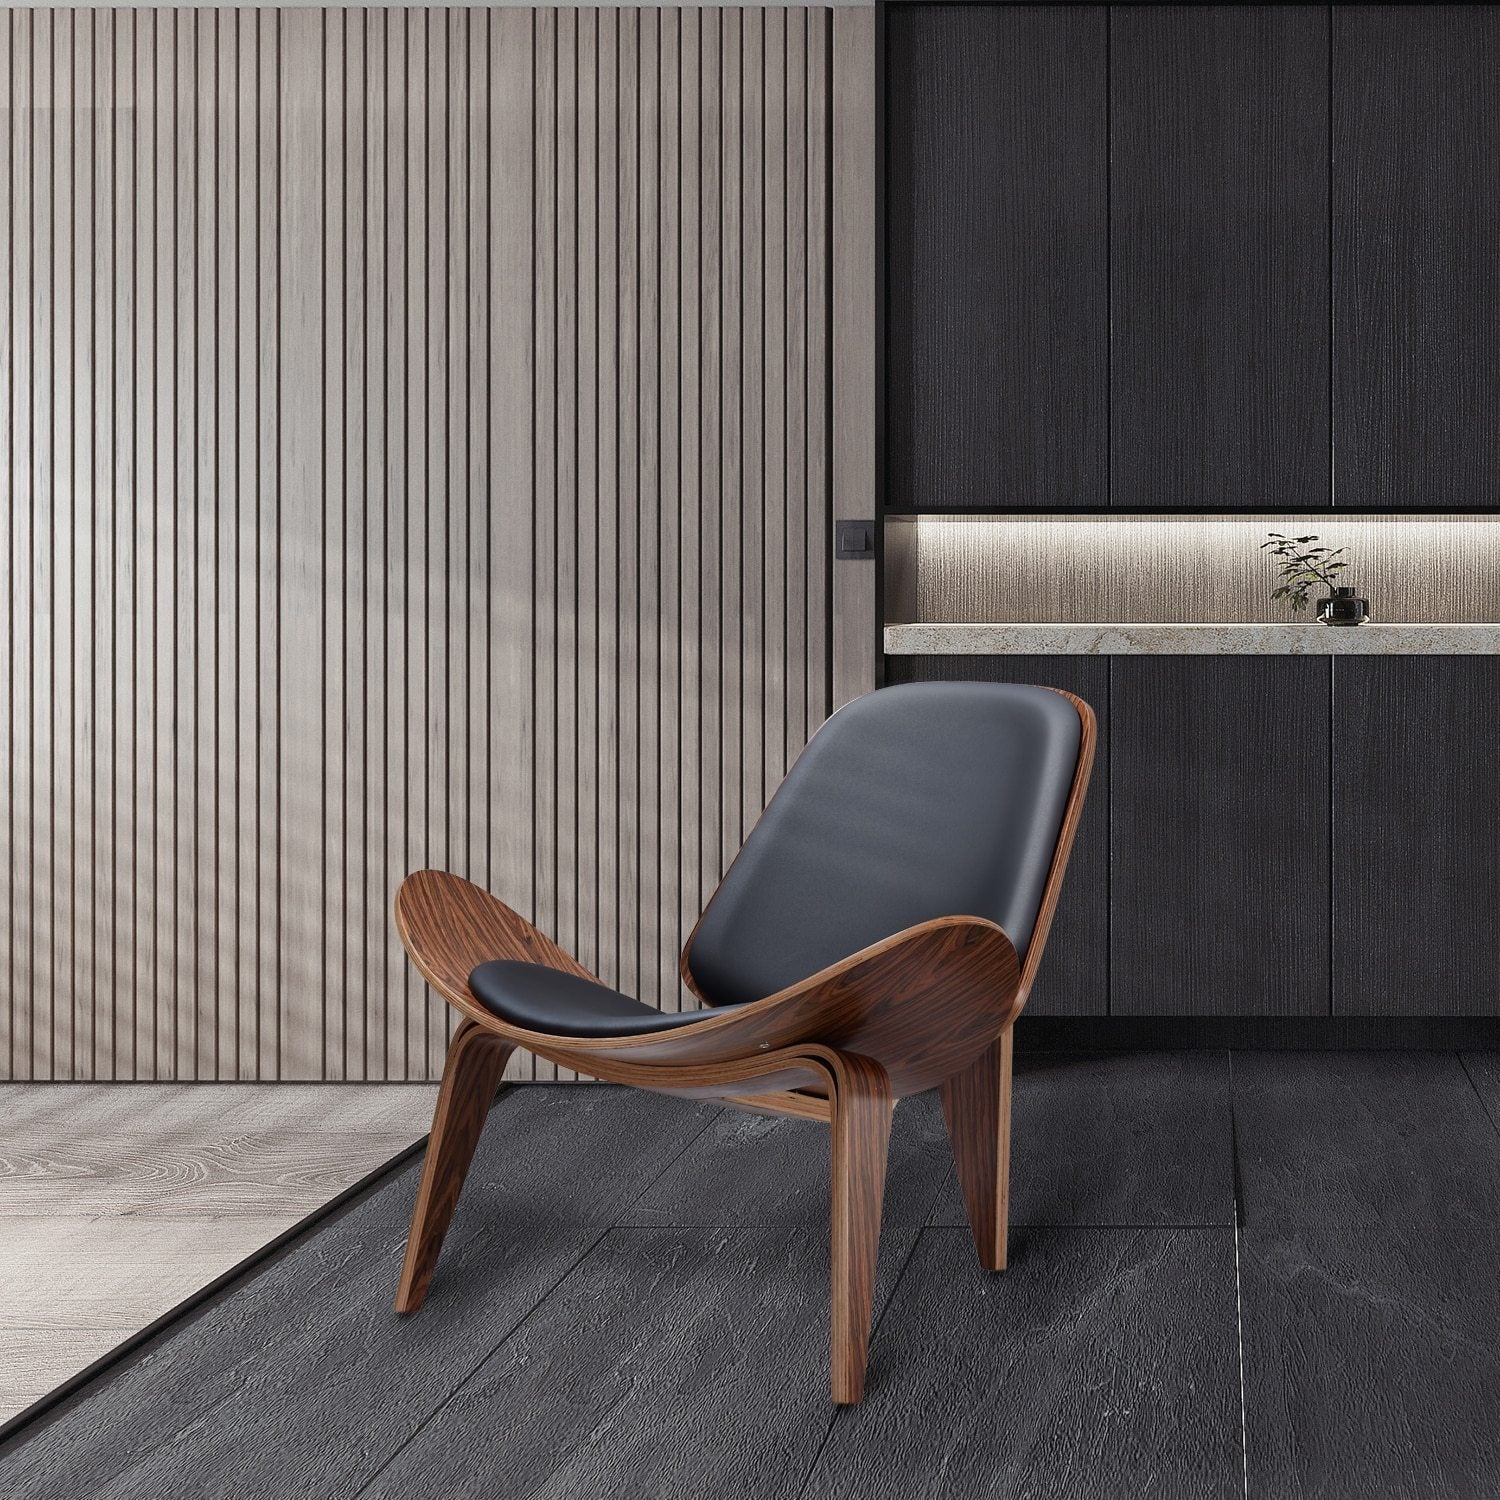 Luxury Vegan Leather Lounge & Chair: Modern Elegant Homes for Design